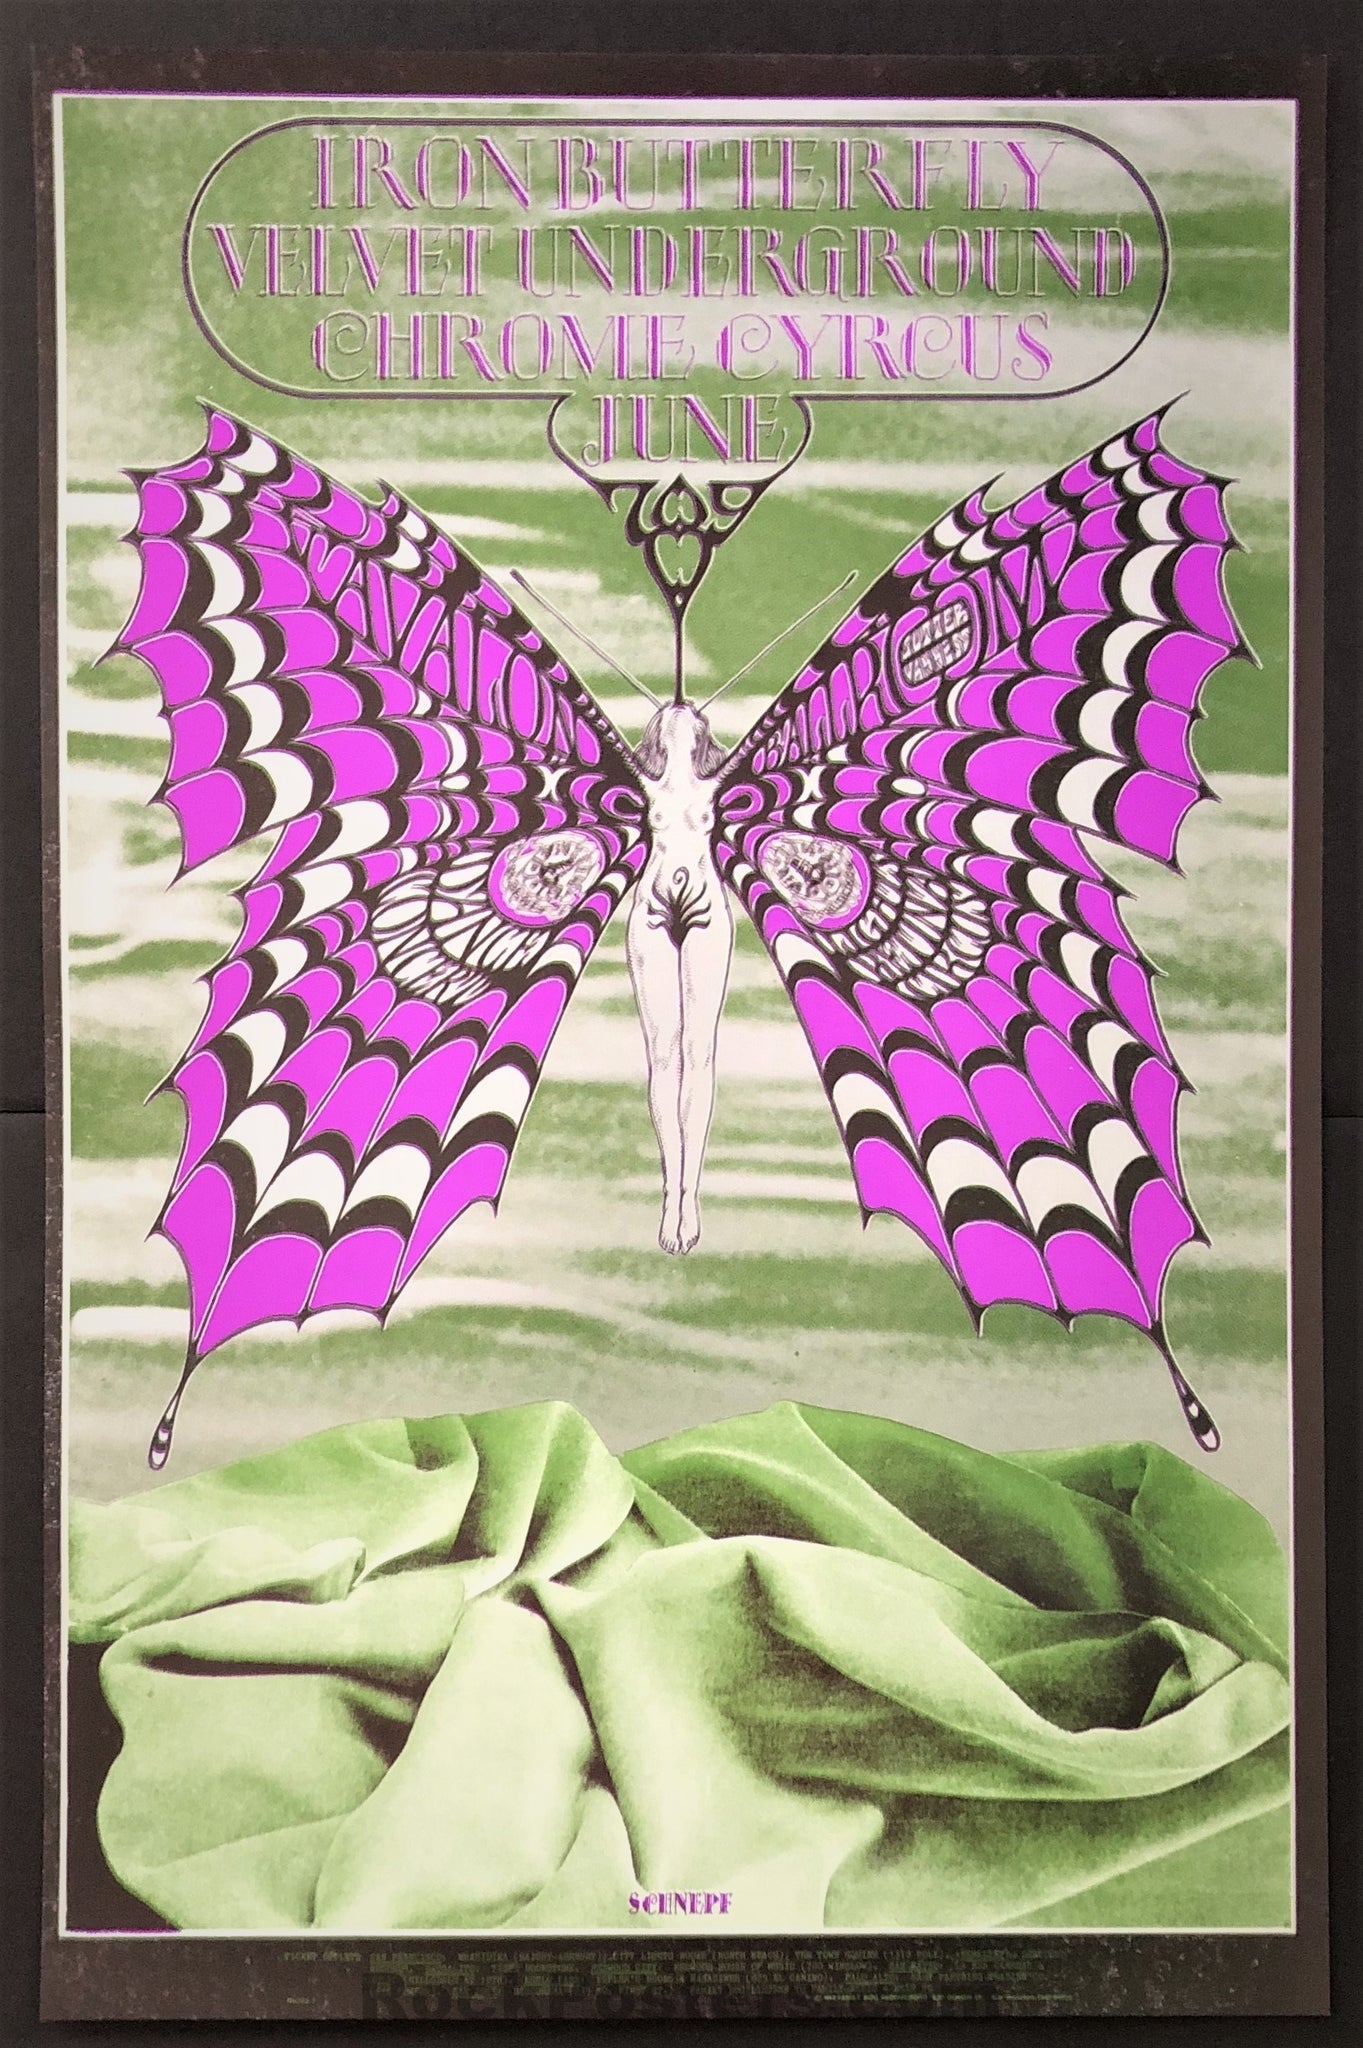 AUCTION - FD-122 - Velvet Underground - Bob Schnepf - 1968 Poster - Avalon Ballroom - Mint